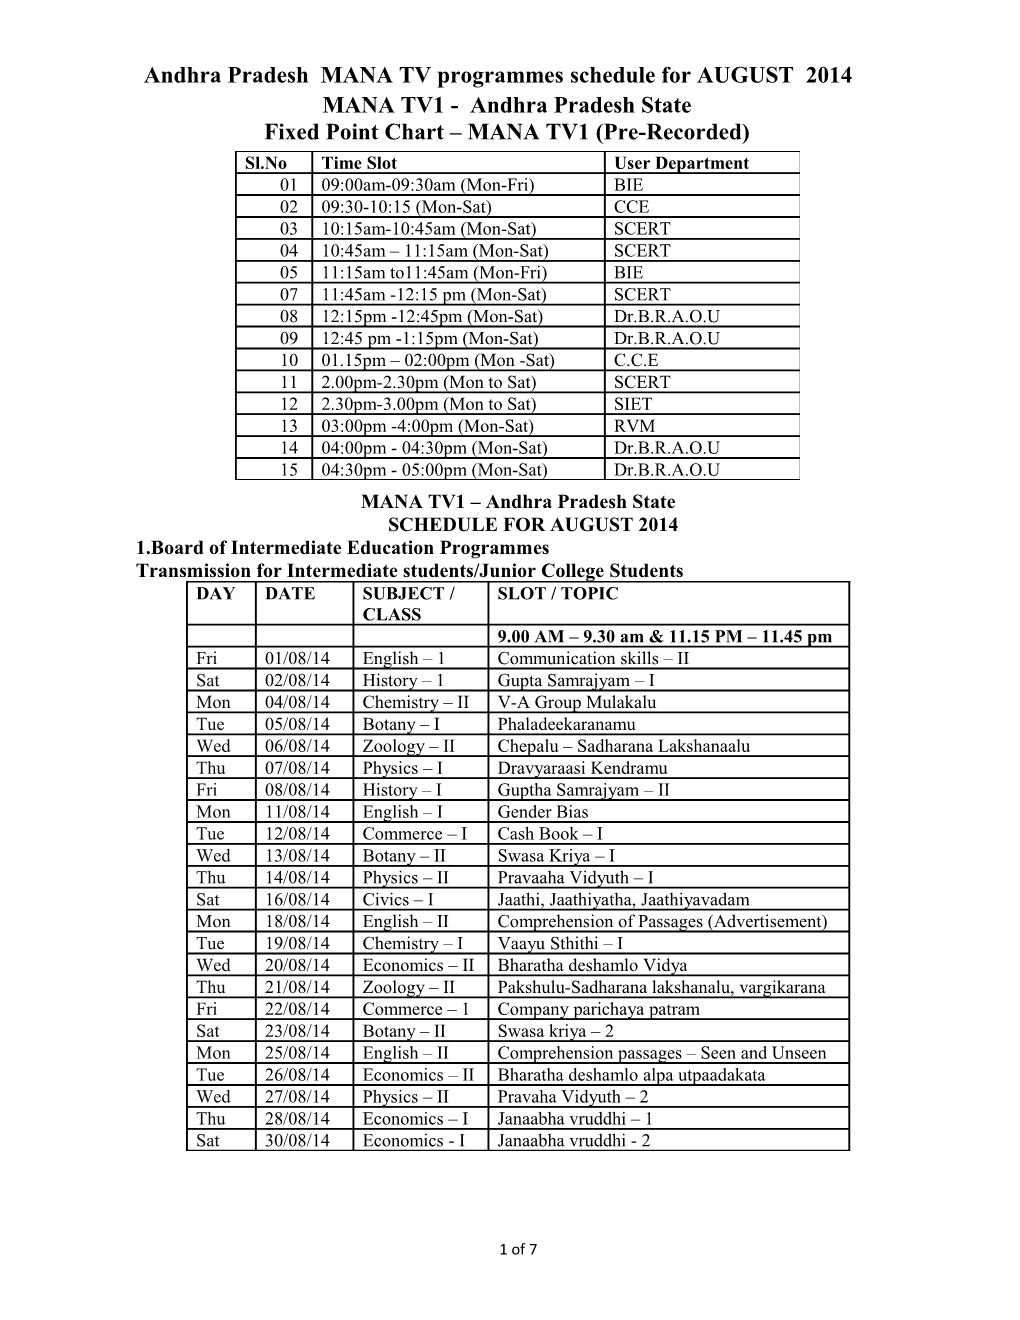 Andhra Pradesh MANA TV Programmes Schedule for AUGUST 2014